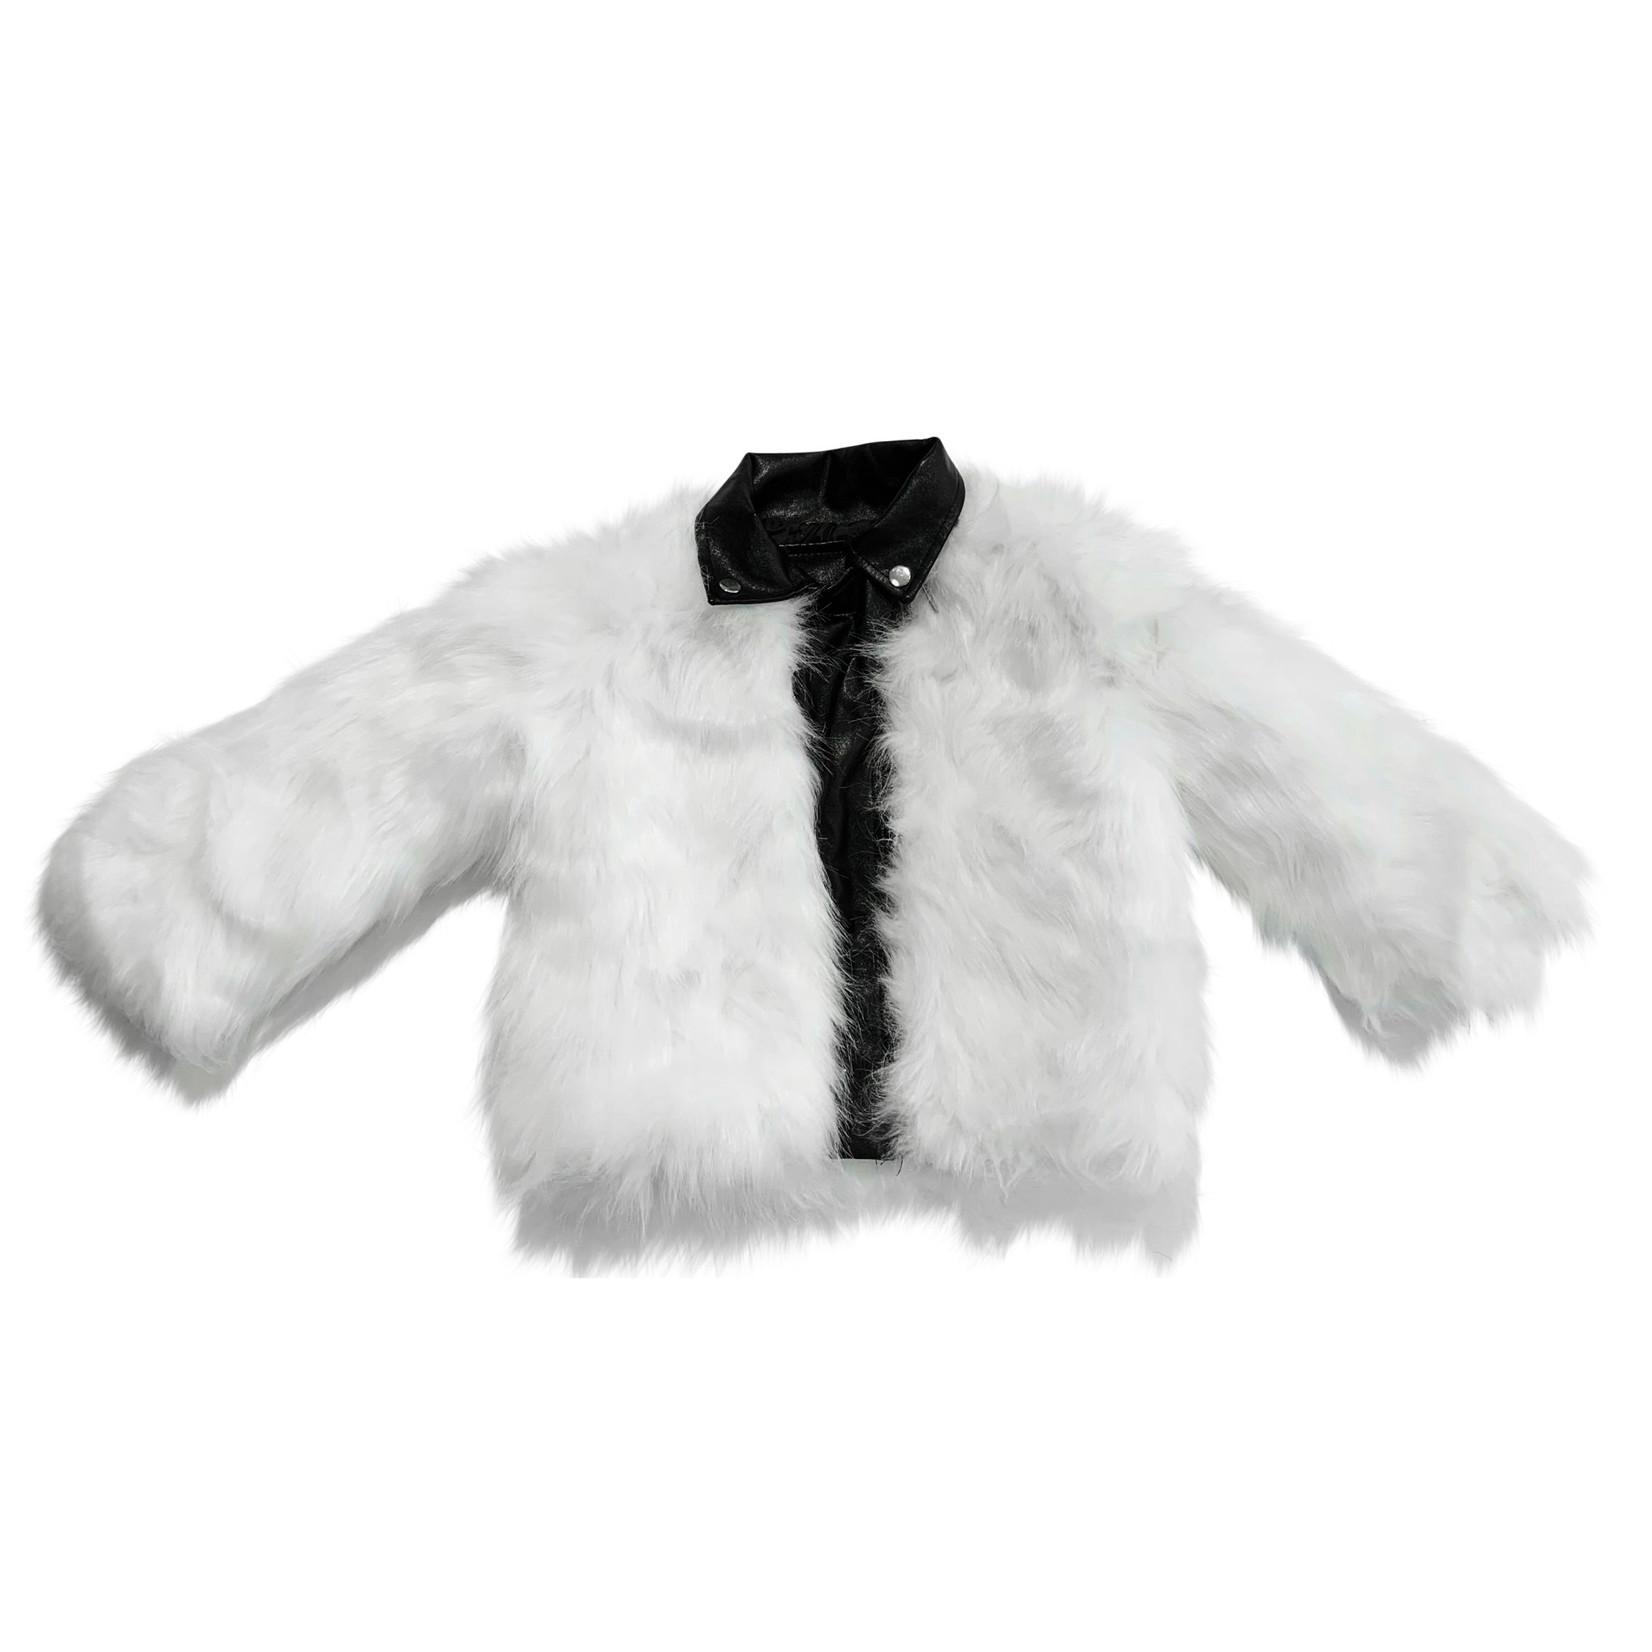 Wyld Blue White Fur Jacket Leather Collar 18M